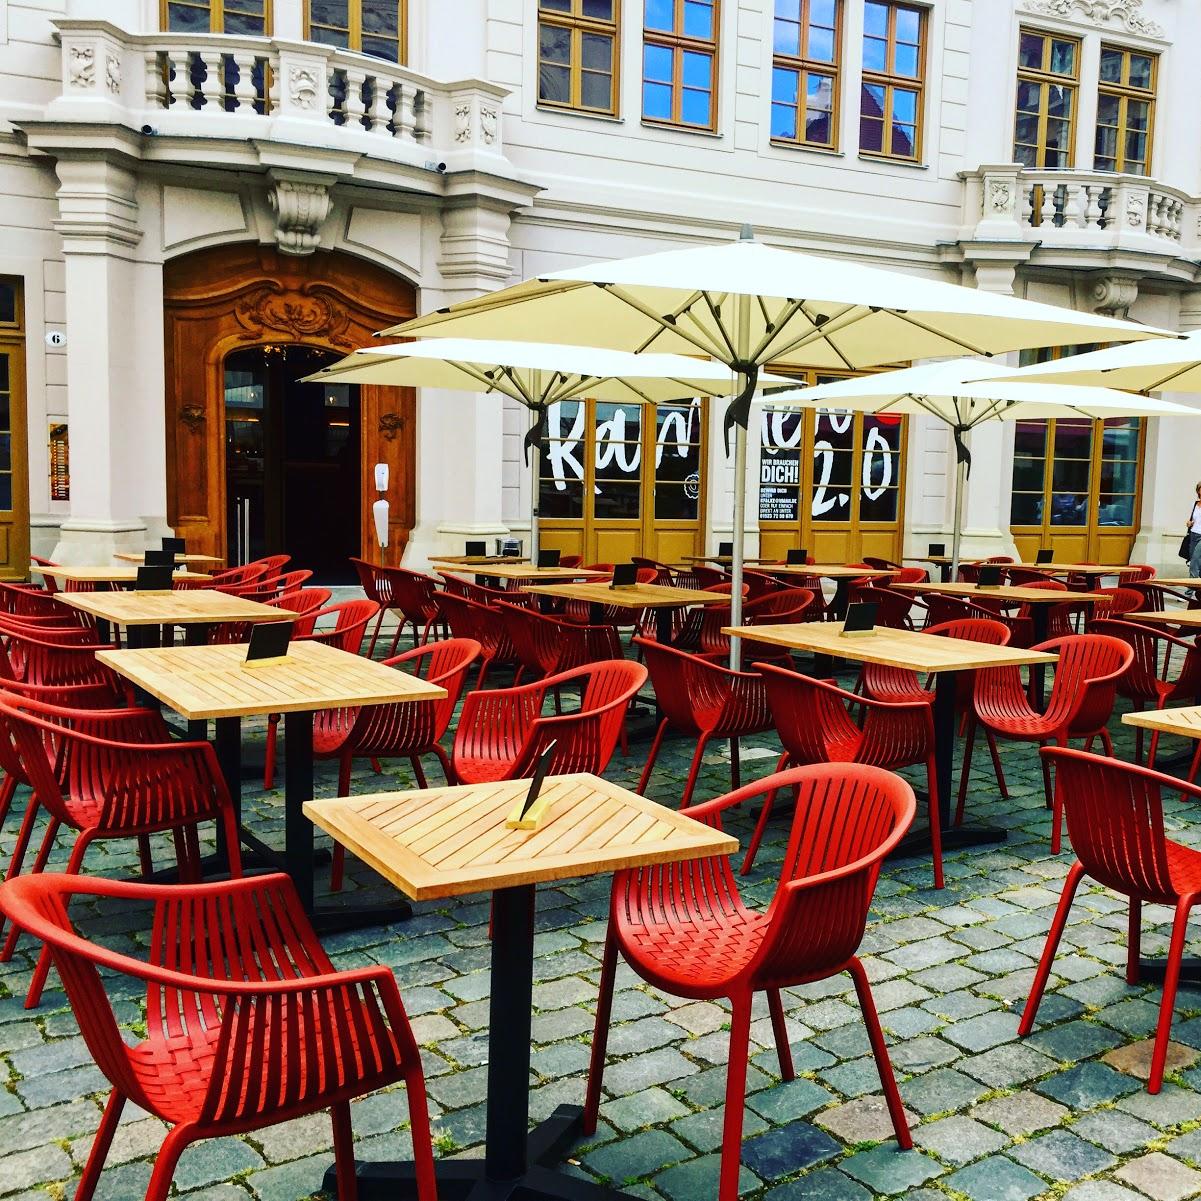 Restaurant "Umaii" in Dresden